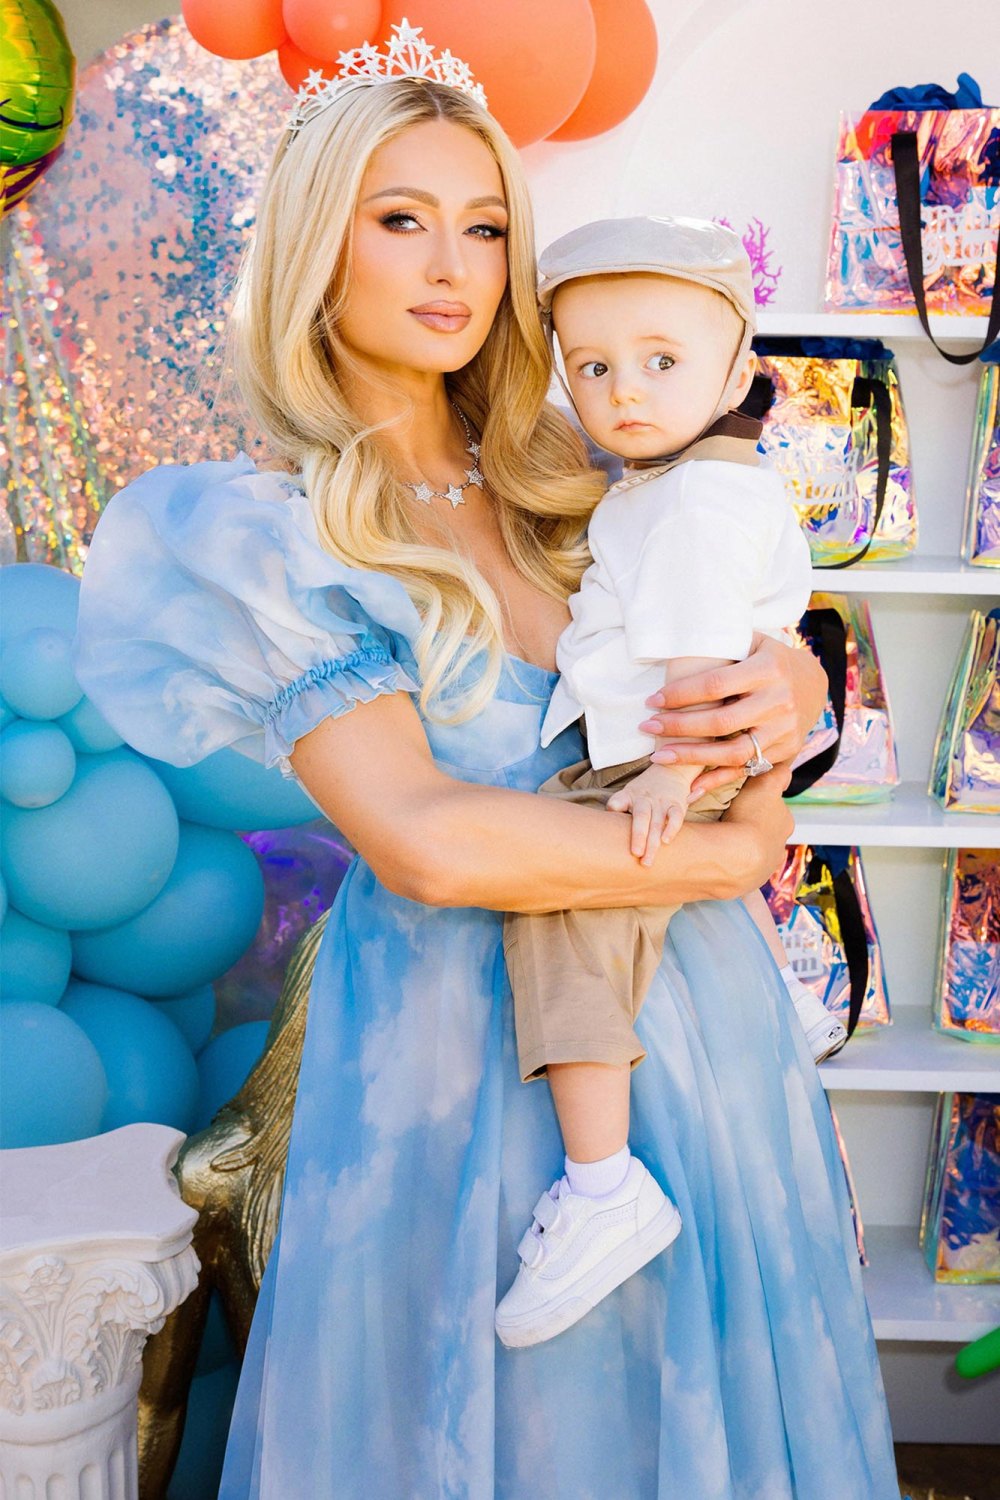 Paris Hilton Jokes Clubitis Is Hereditary as Her Baby Boy Dances the Night Away